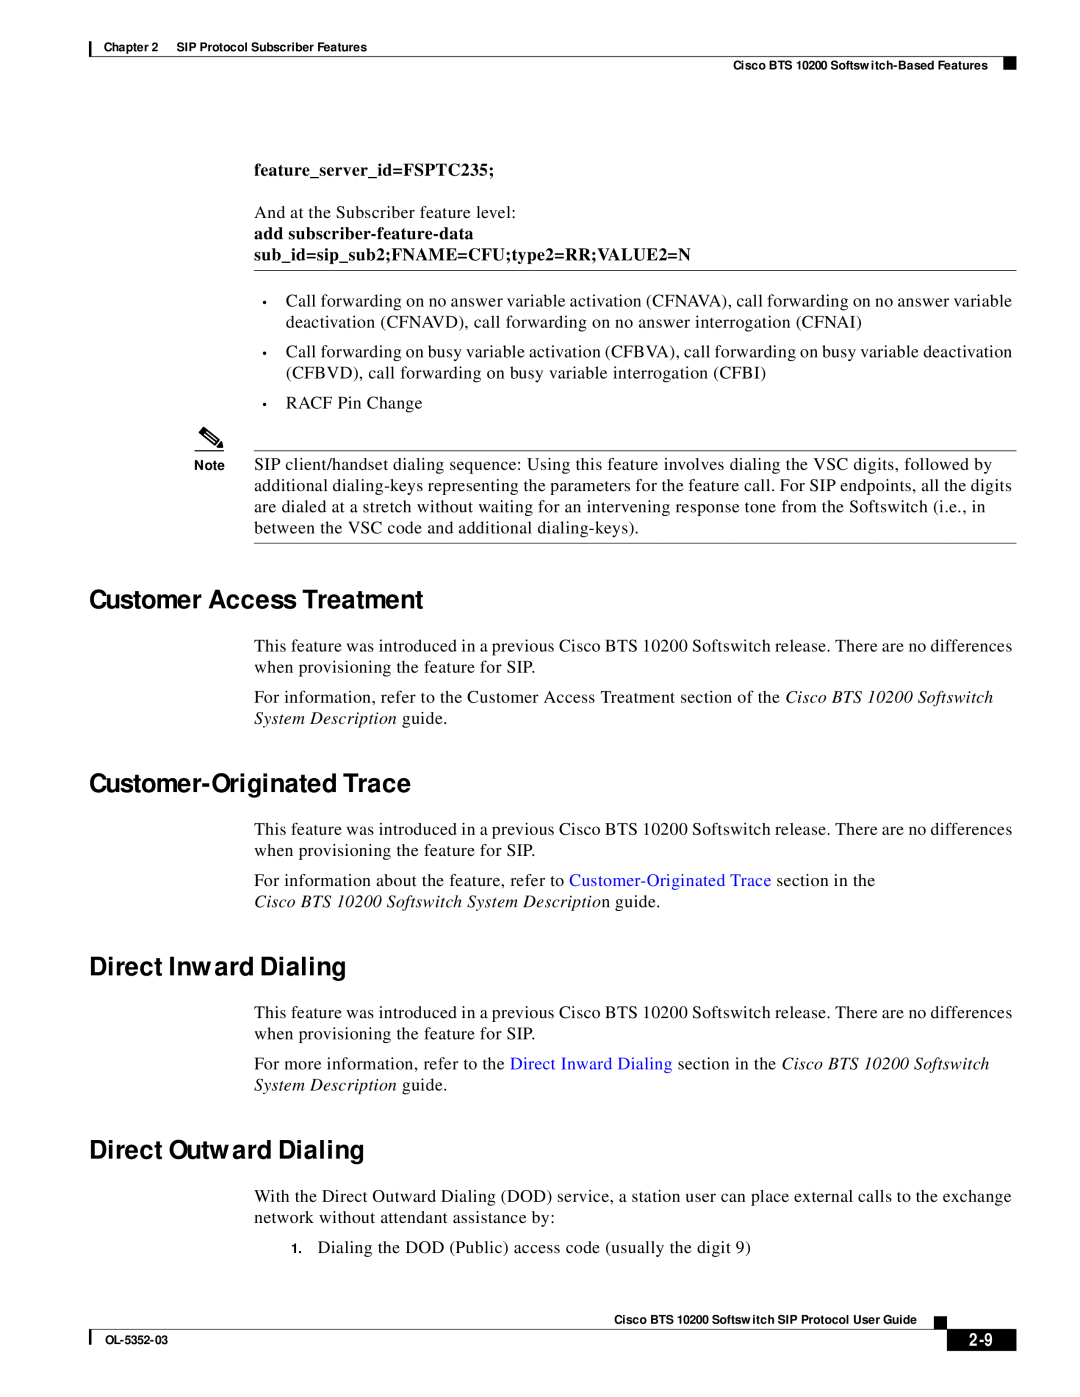 Cisco Systems BTS 10200 manual Customer Access Treatment, Customer-Originated Trace, Direct Inward Dialing 